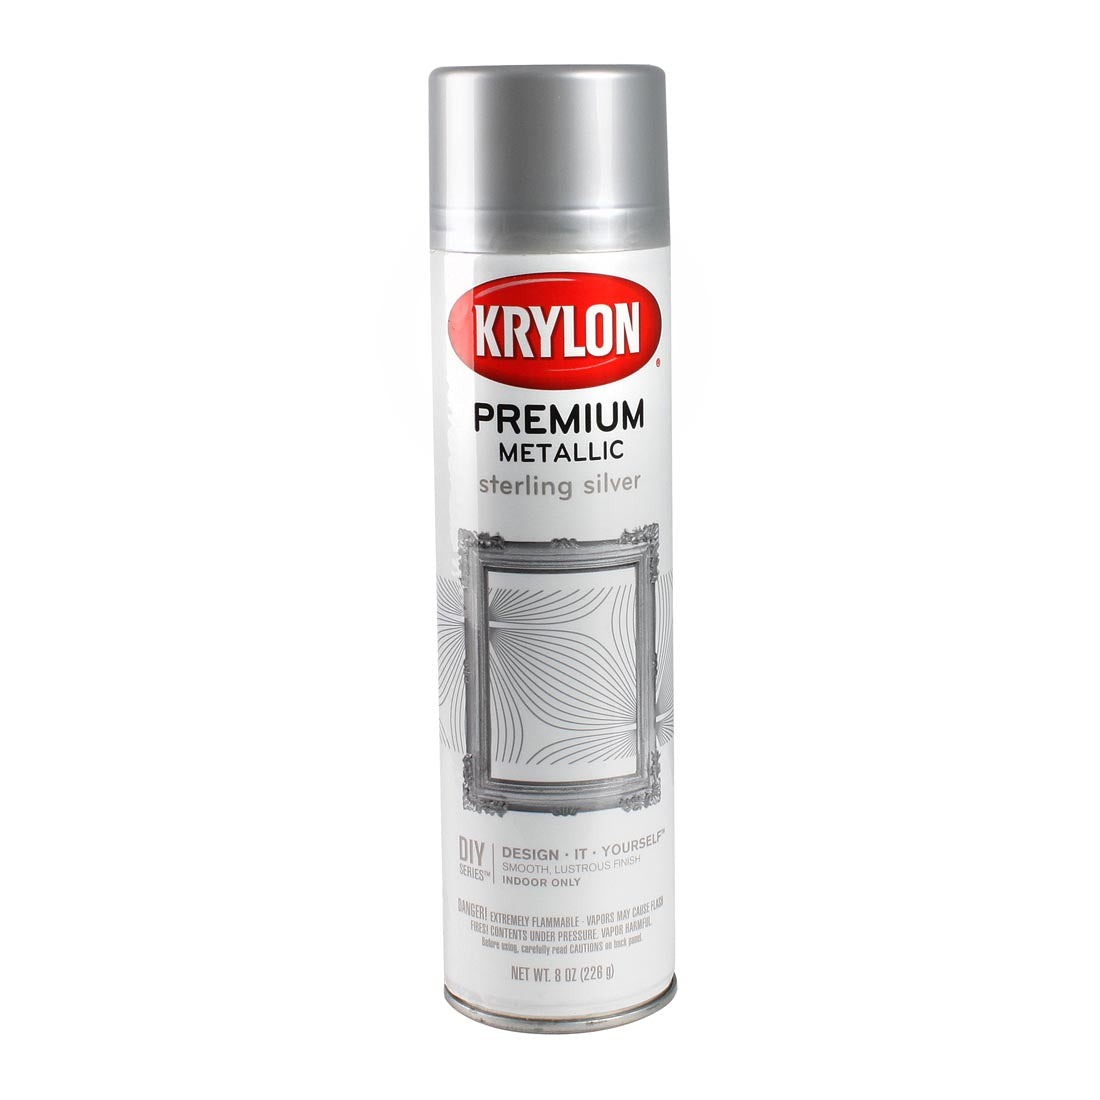 Krylon Premium Metallic Spray Paint - Sterling Silver 8oz